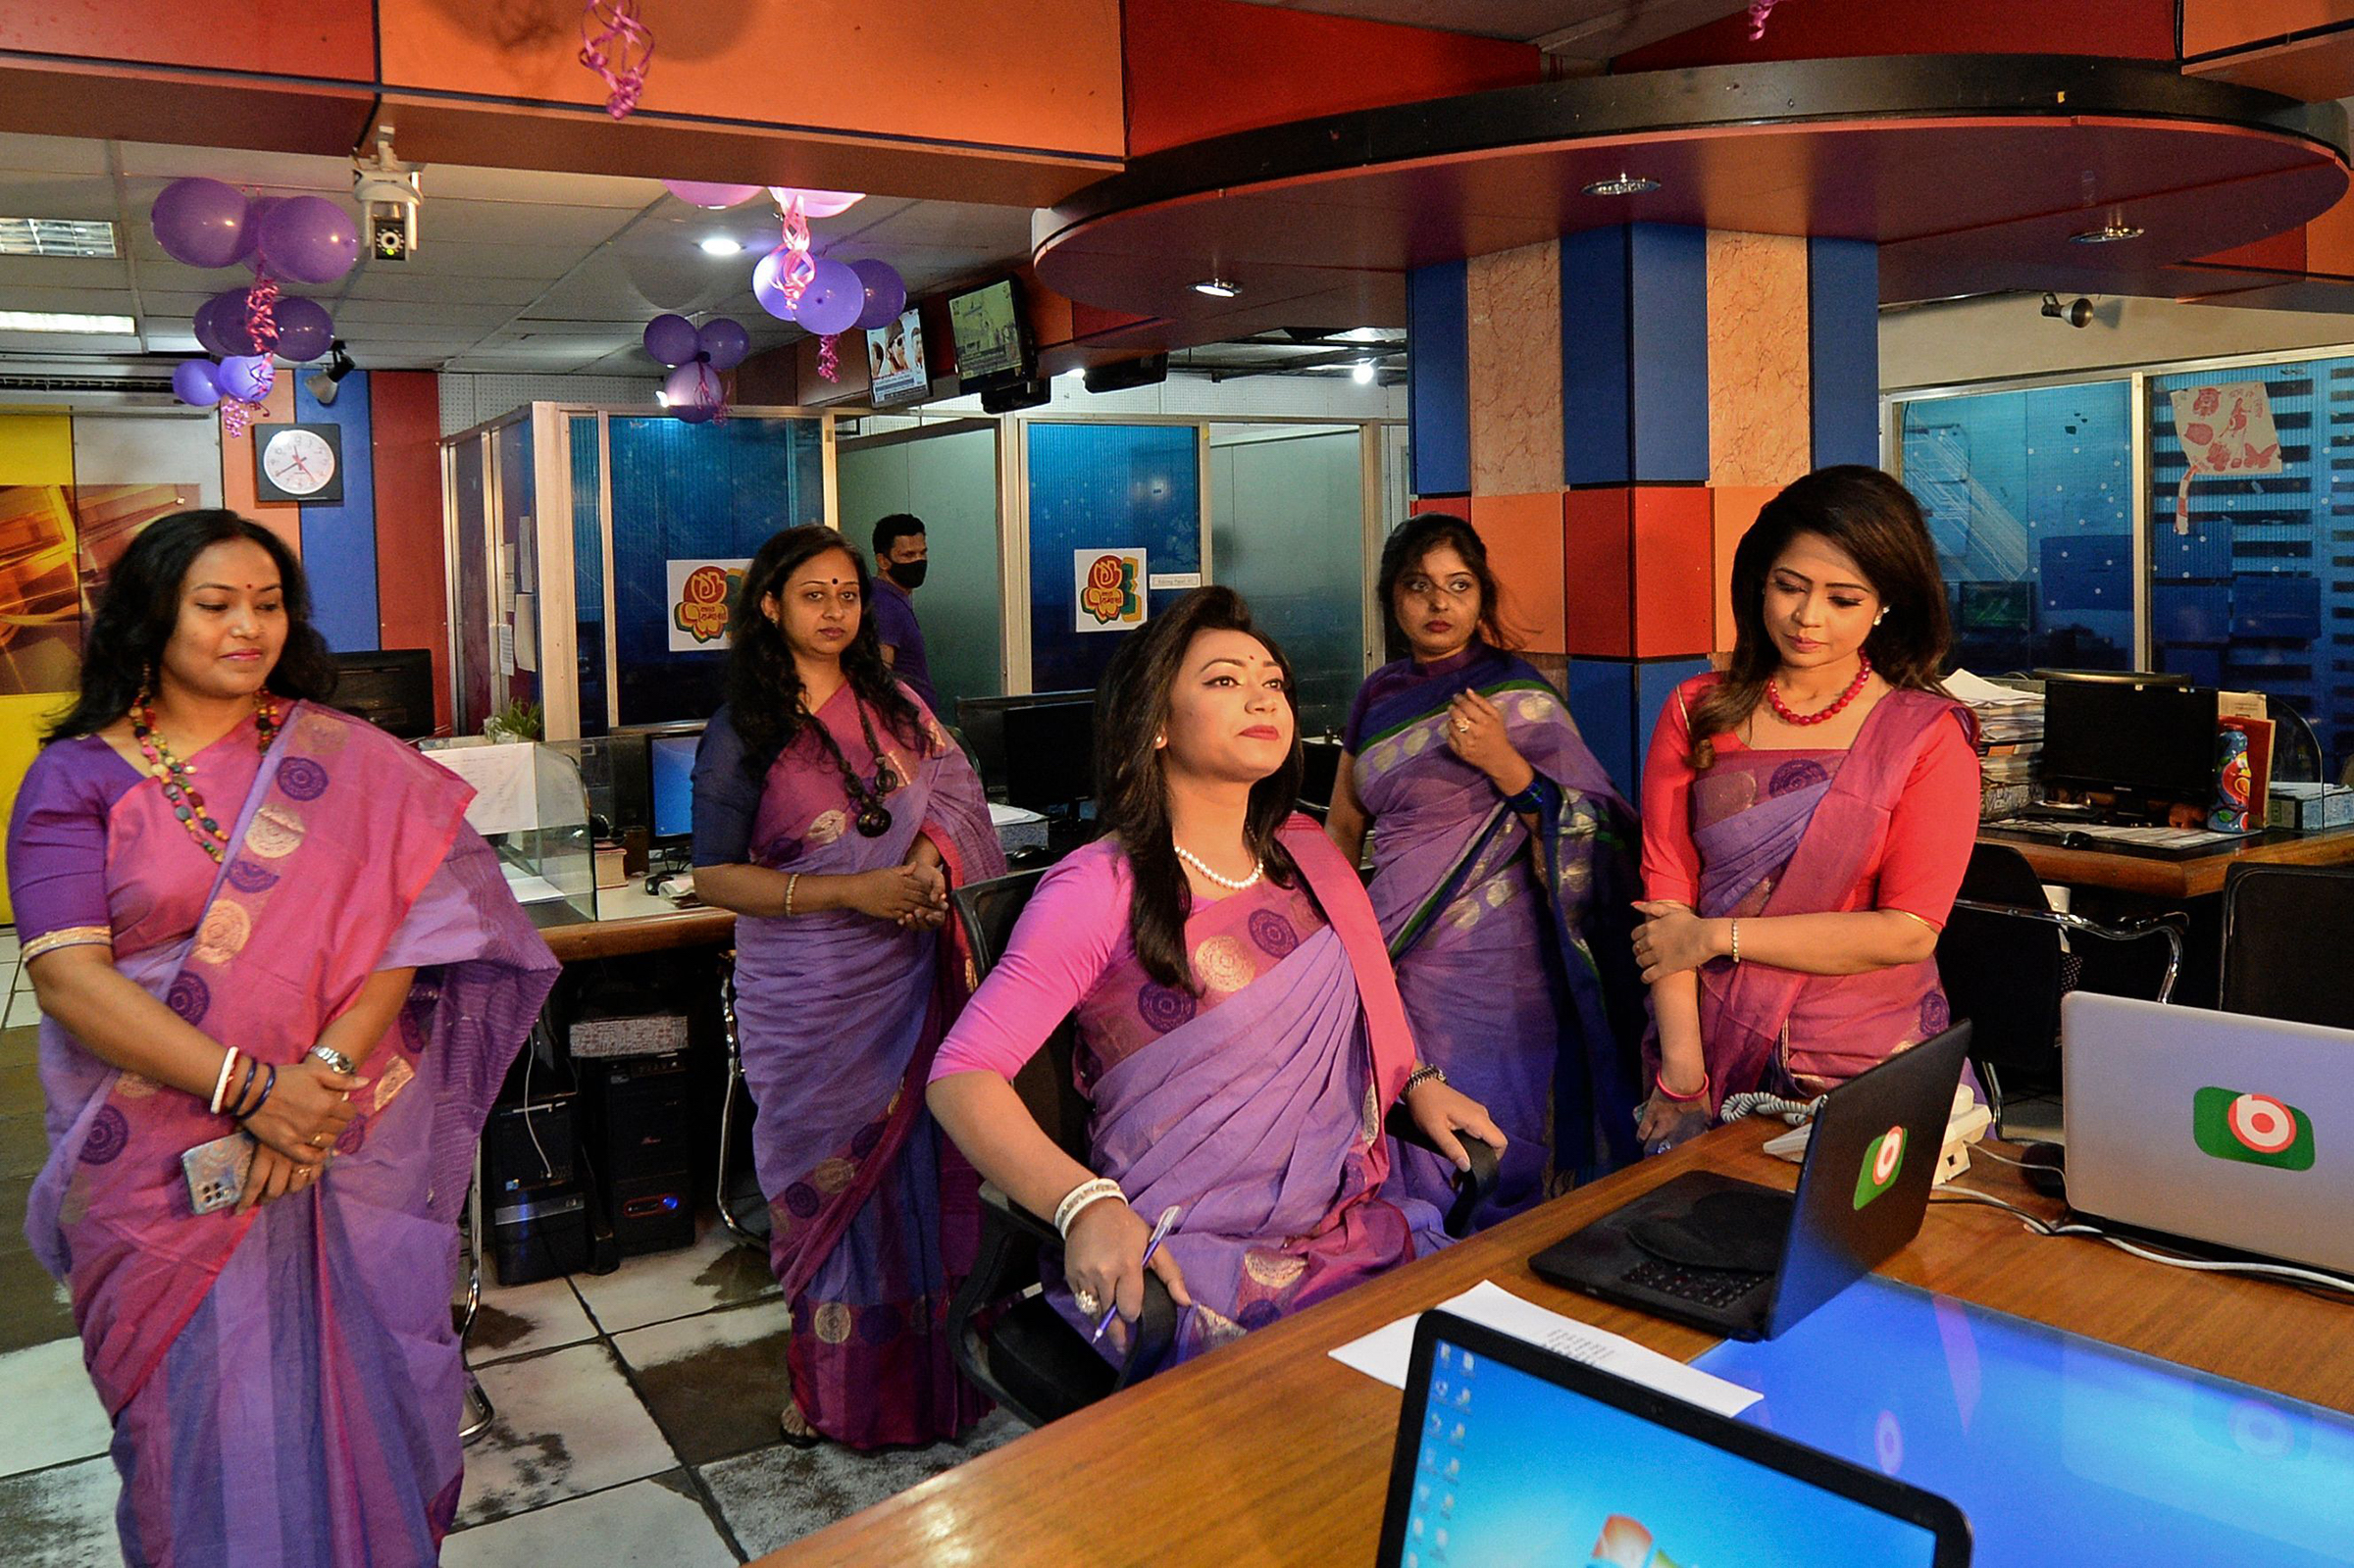 Tashnuva Anan Shishir made history as Bangladesh's first transgender television news anchor by reading a three-minute news segment in Dhaka on March 8, International Women’s Day.